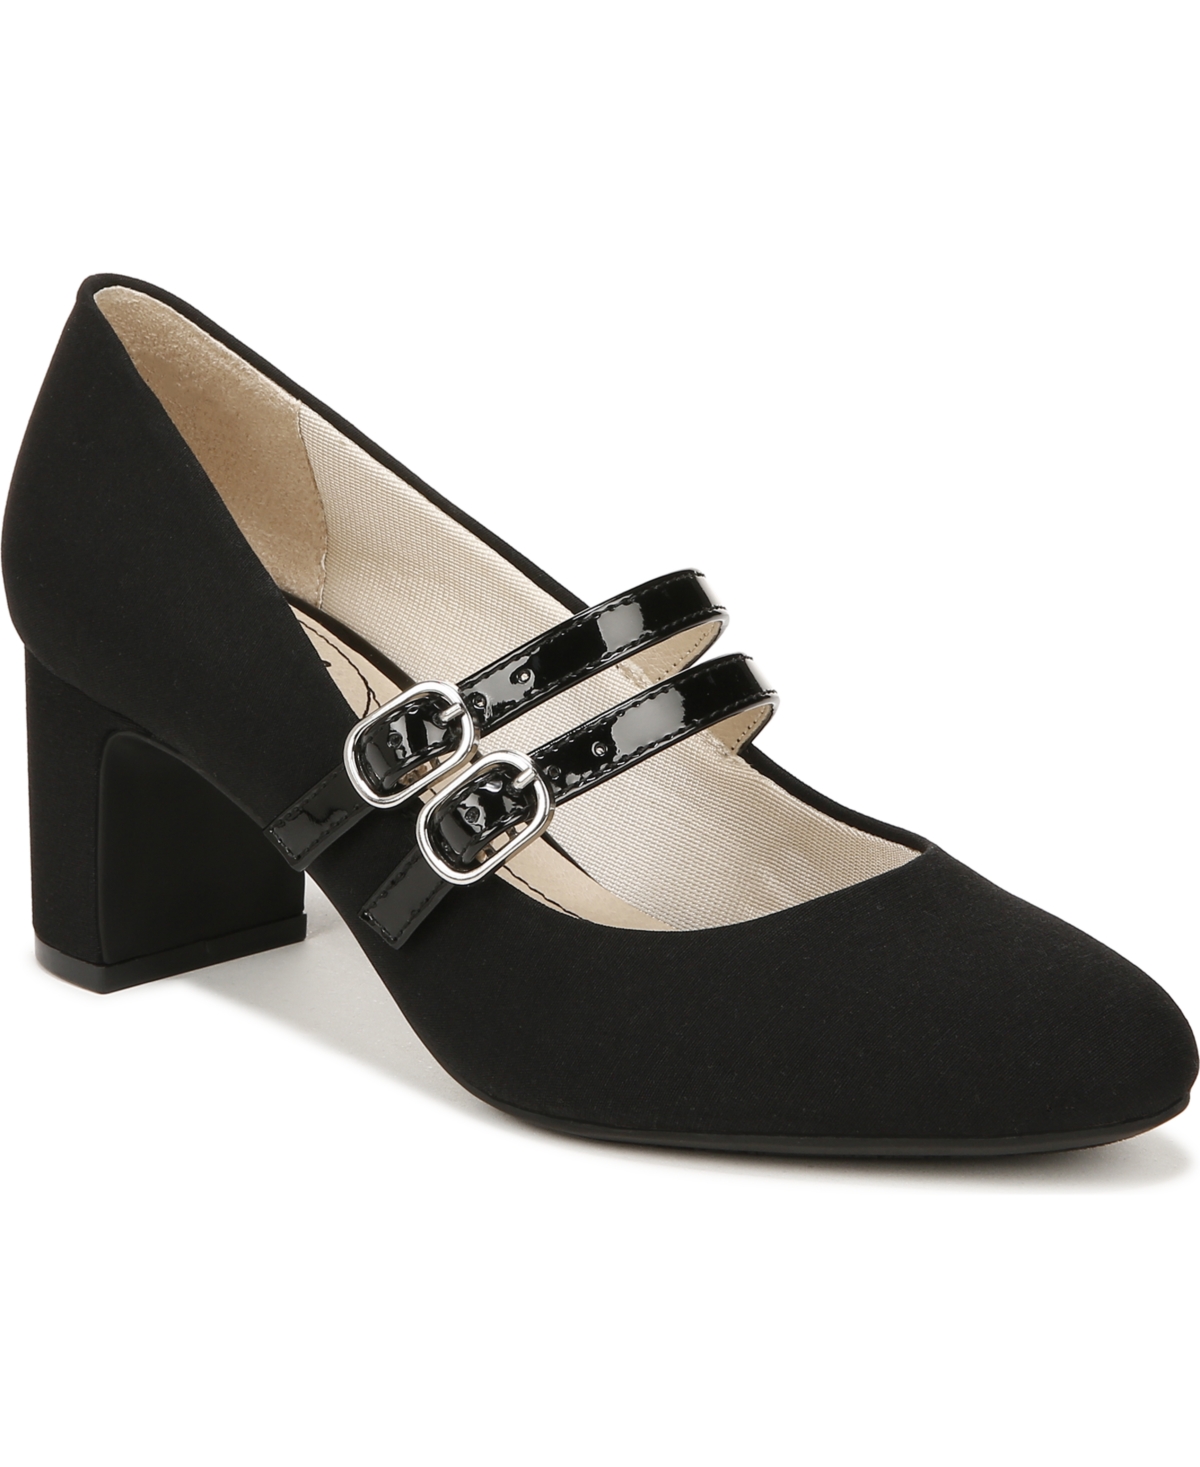 60s Shoes, Go Go Boots | 1960s Shoes, Flats, Heels, Boots LifeStride True Mary Jane Pumps - Black Micron $55.99 AT vintagedancer.com